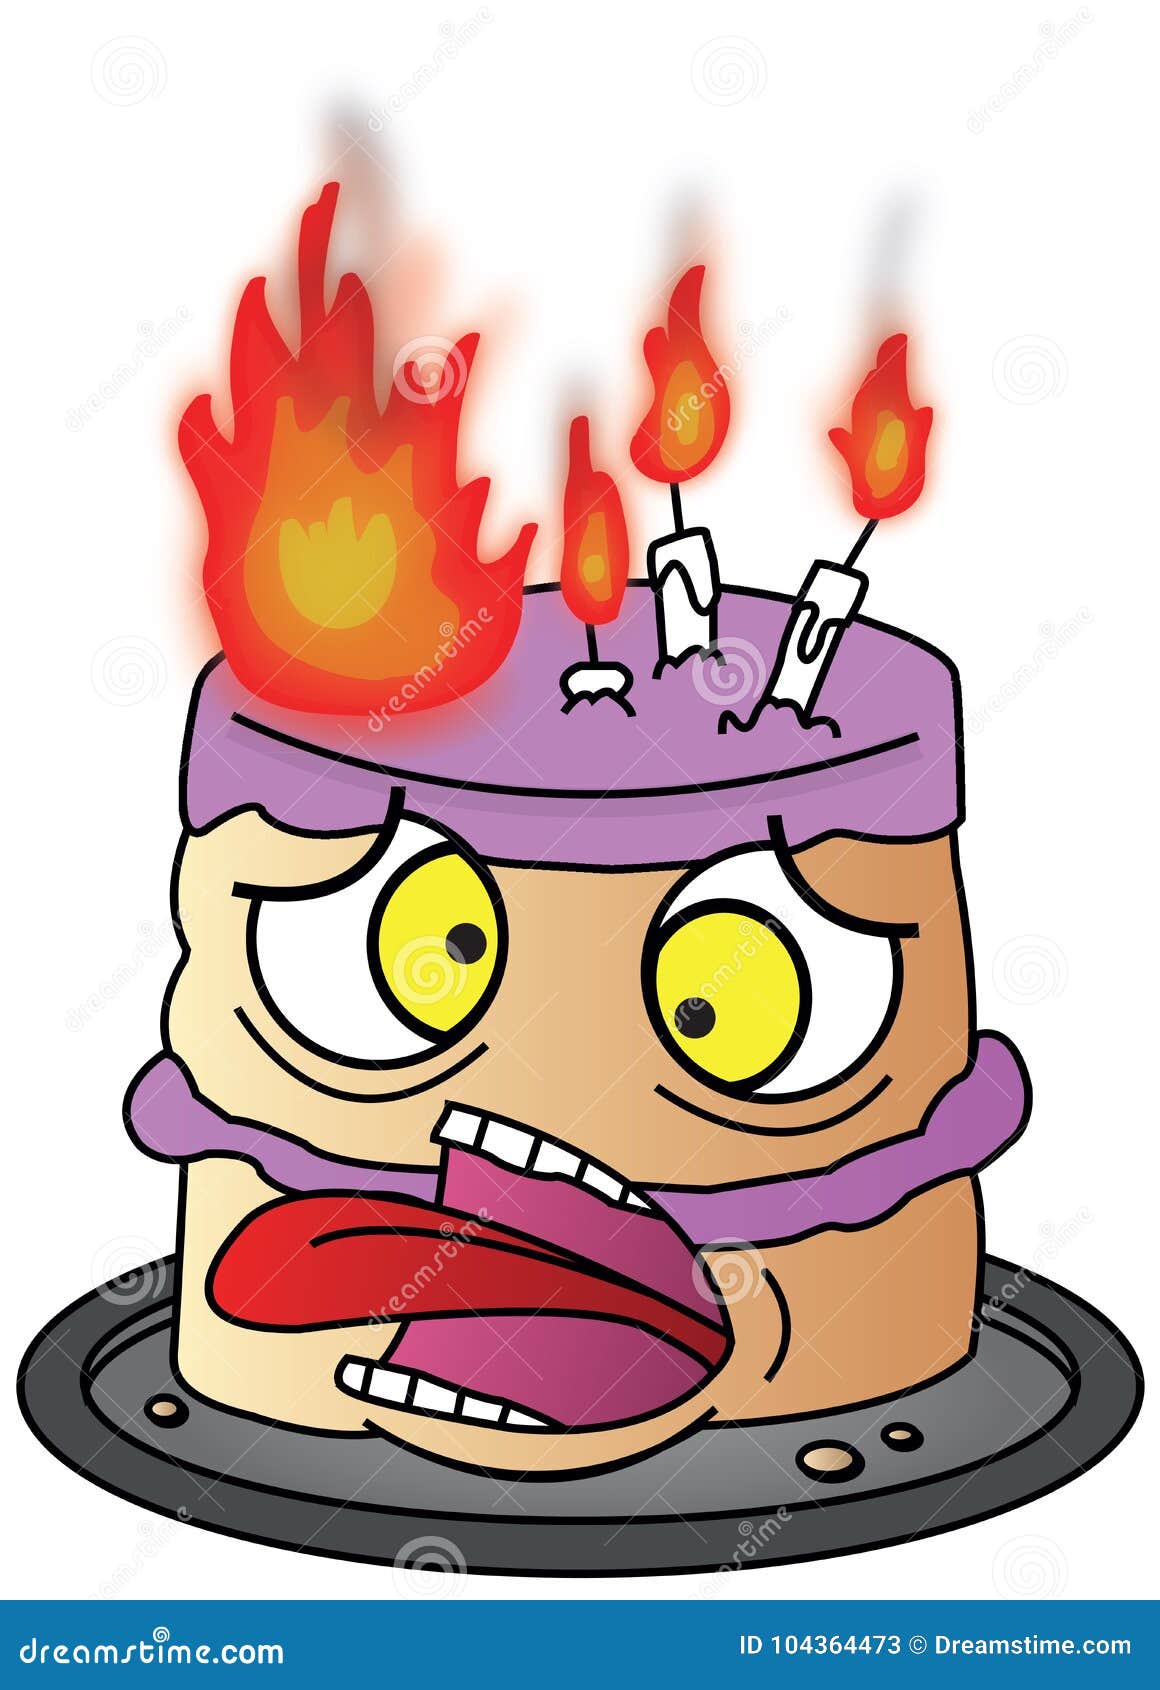 Cartoon Birthday Cake on Fire Stock Illustration - Illustration of cream, burn: 104364473